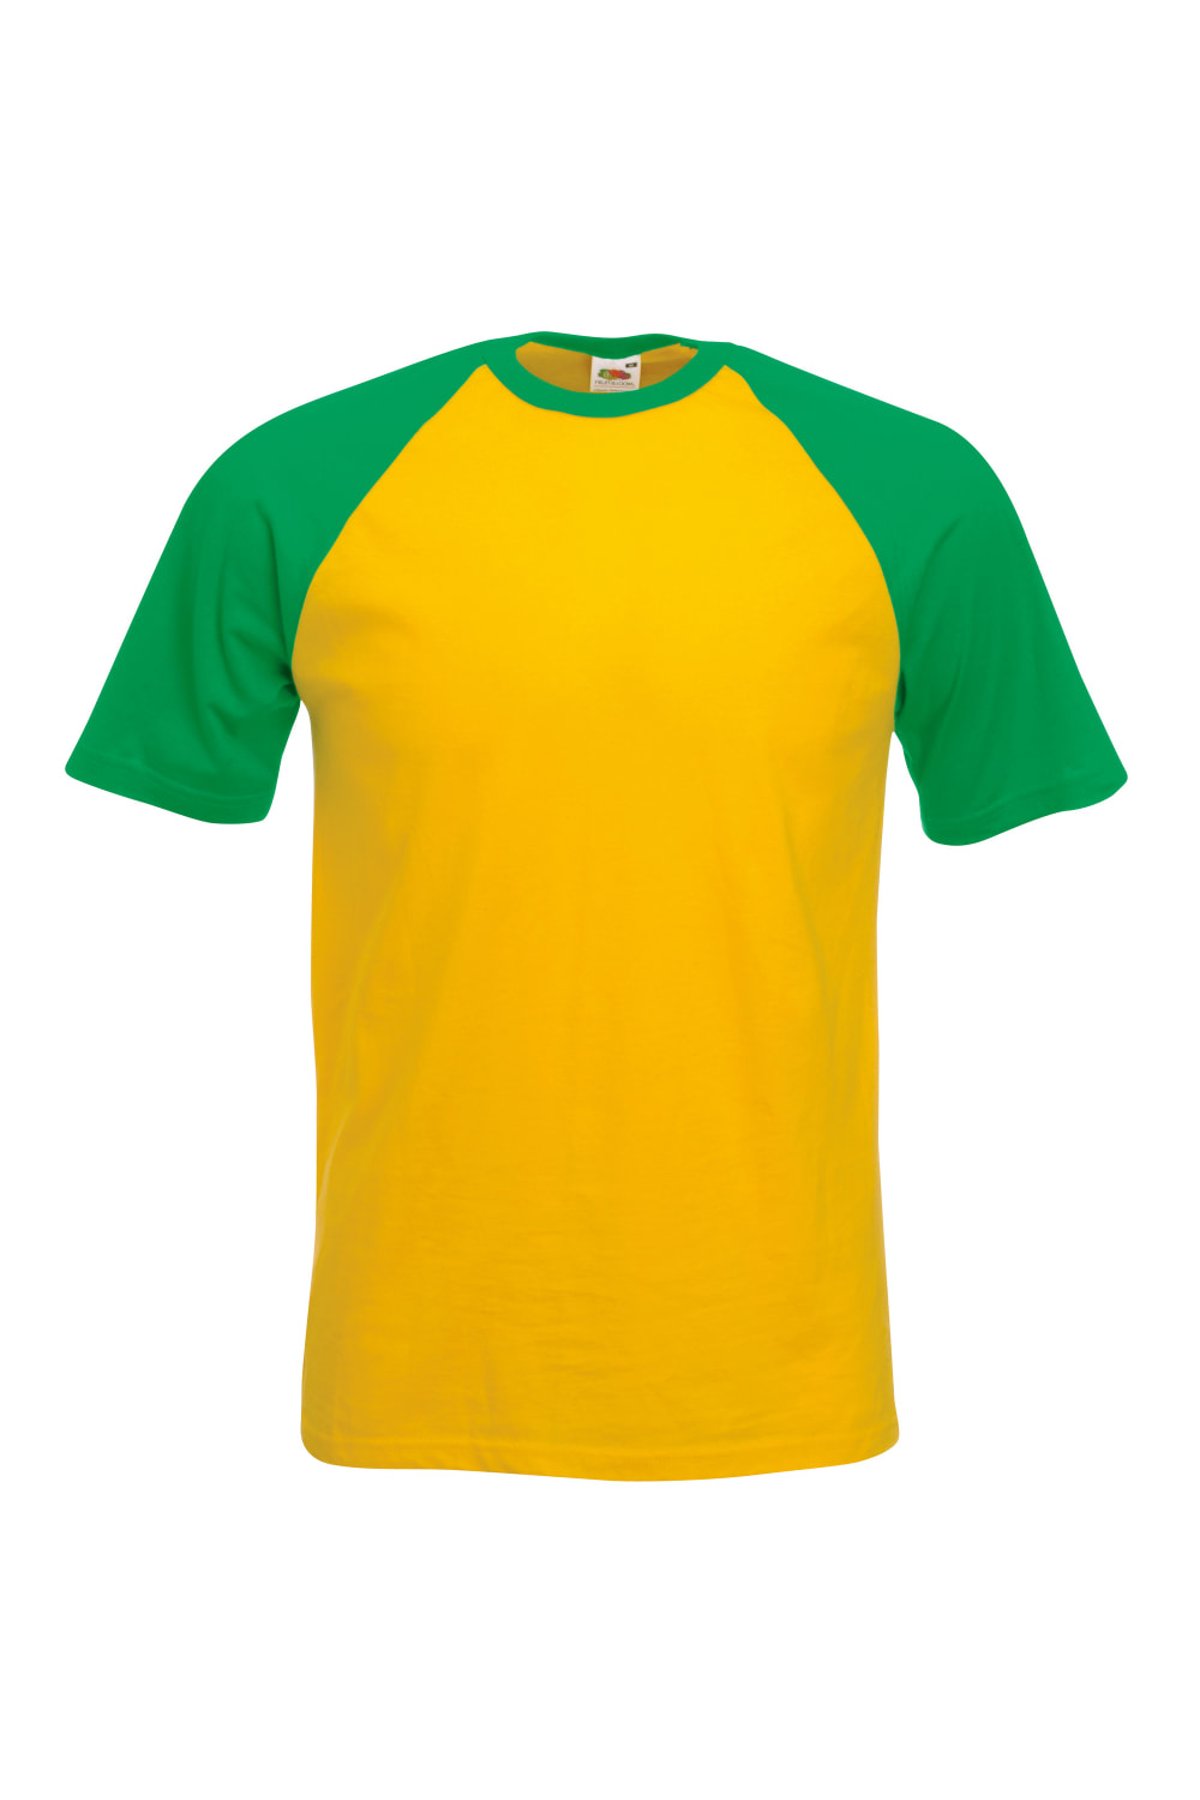 Los Angeles Dodgers Celtic T-Shirt - Kelly Green